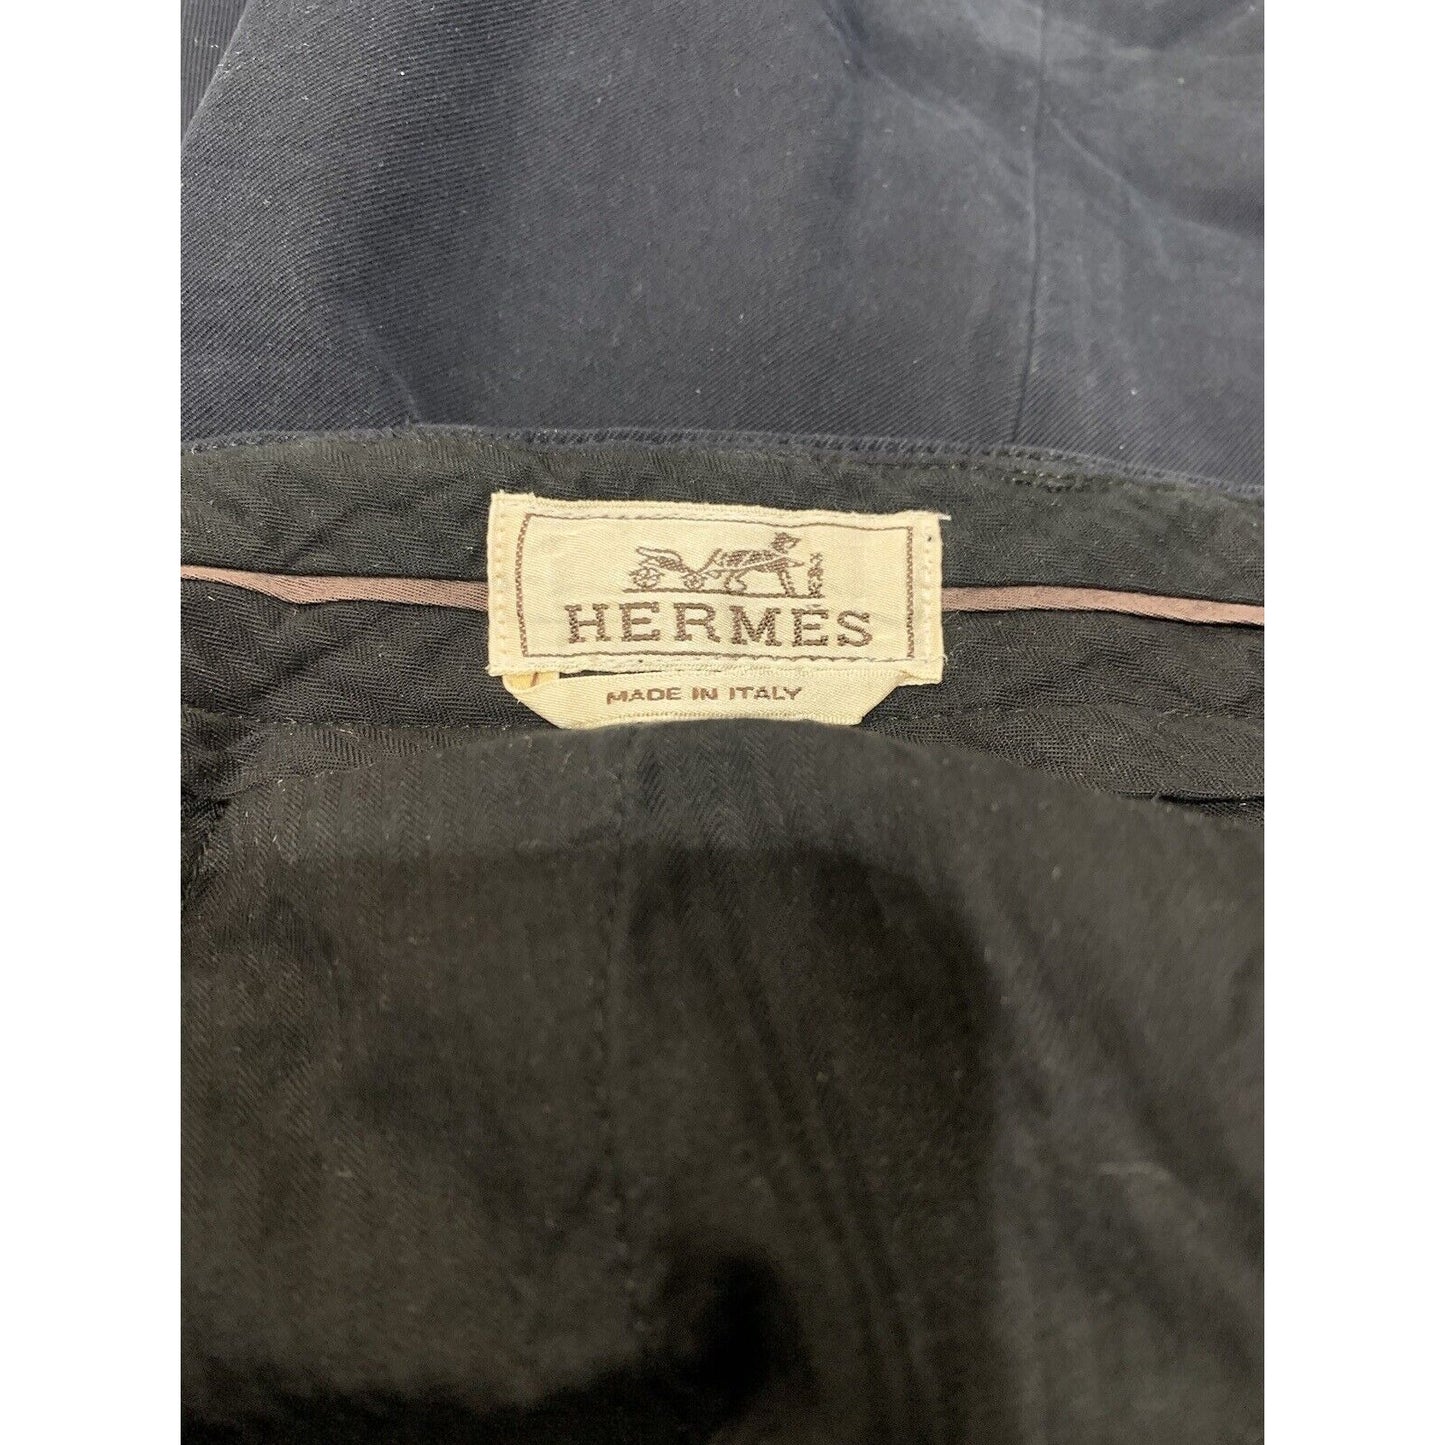 Hermes Men's St. Germain 100% Cotton Casual Pant